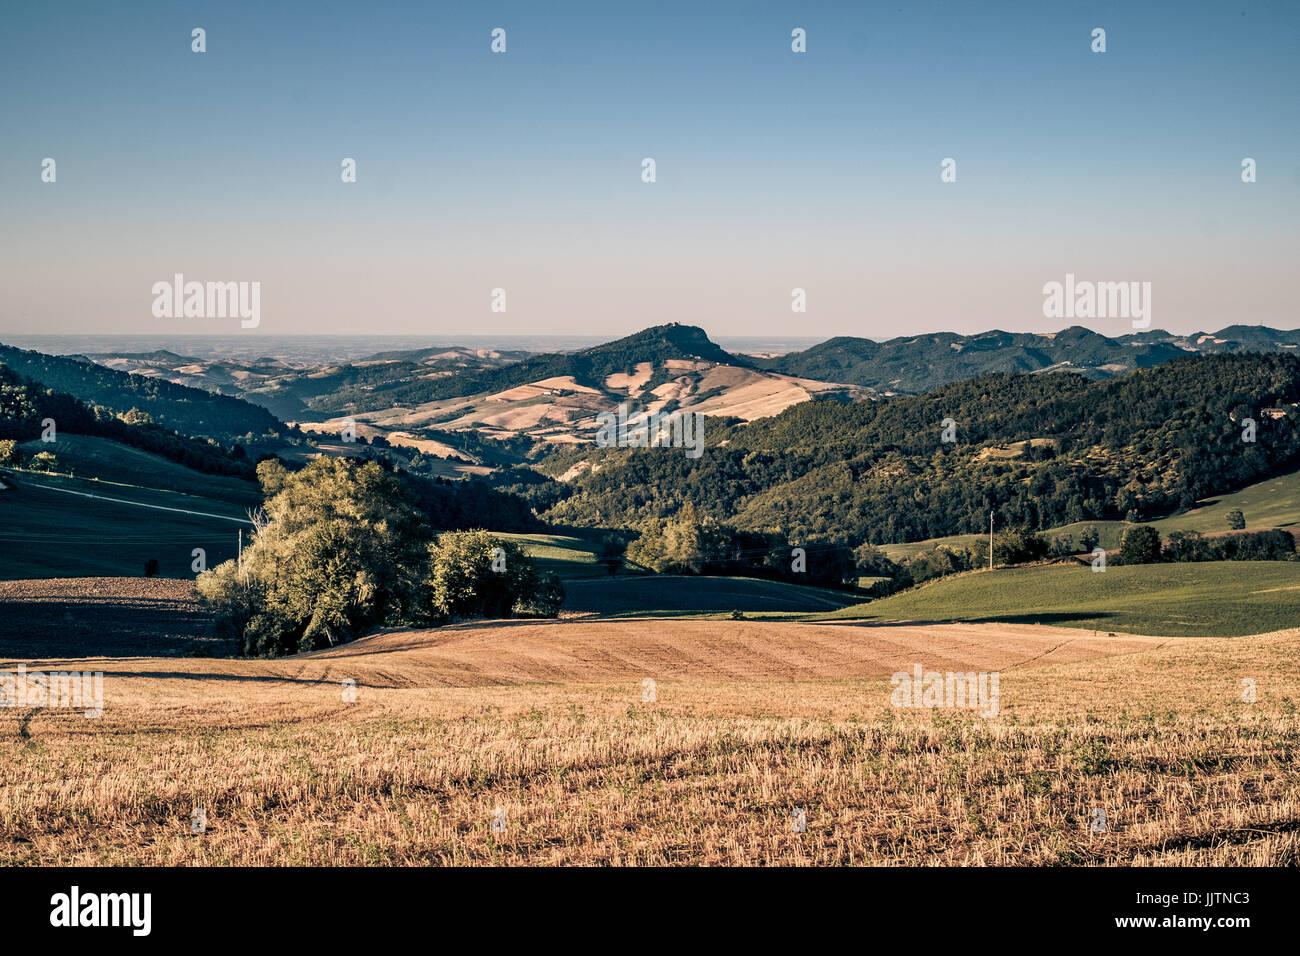 Monte Delle Formiche (Mount der Ameisen) von Loiano, Provinz Bologna, Emilia Romagna, Italien betrachtet. Stockfoto